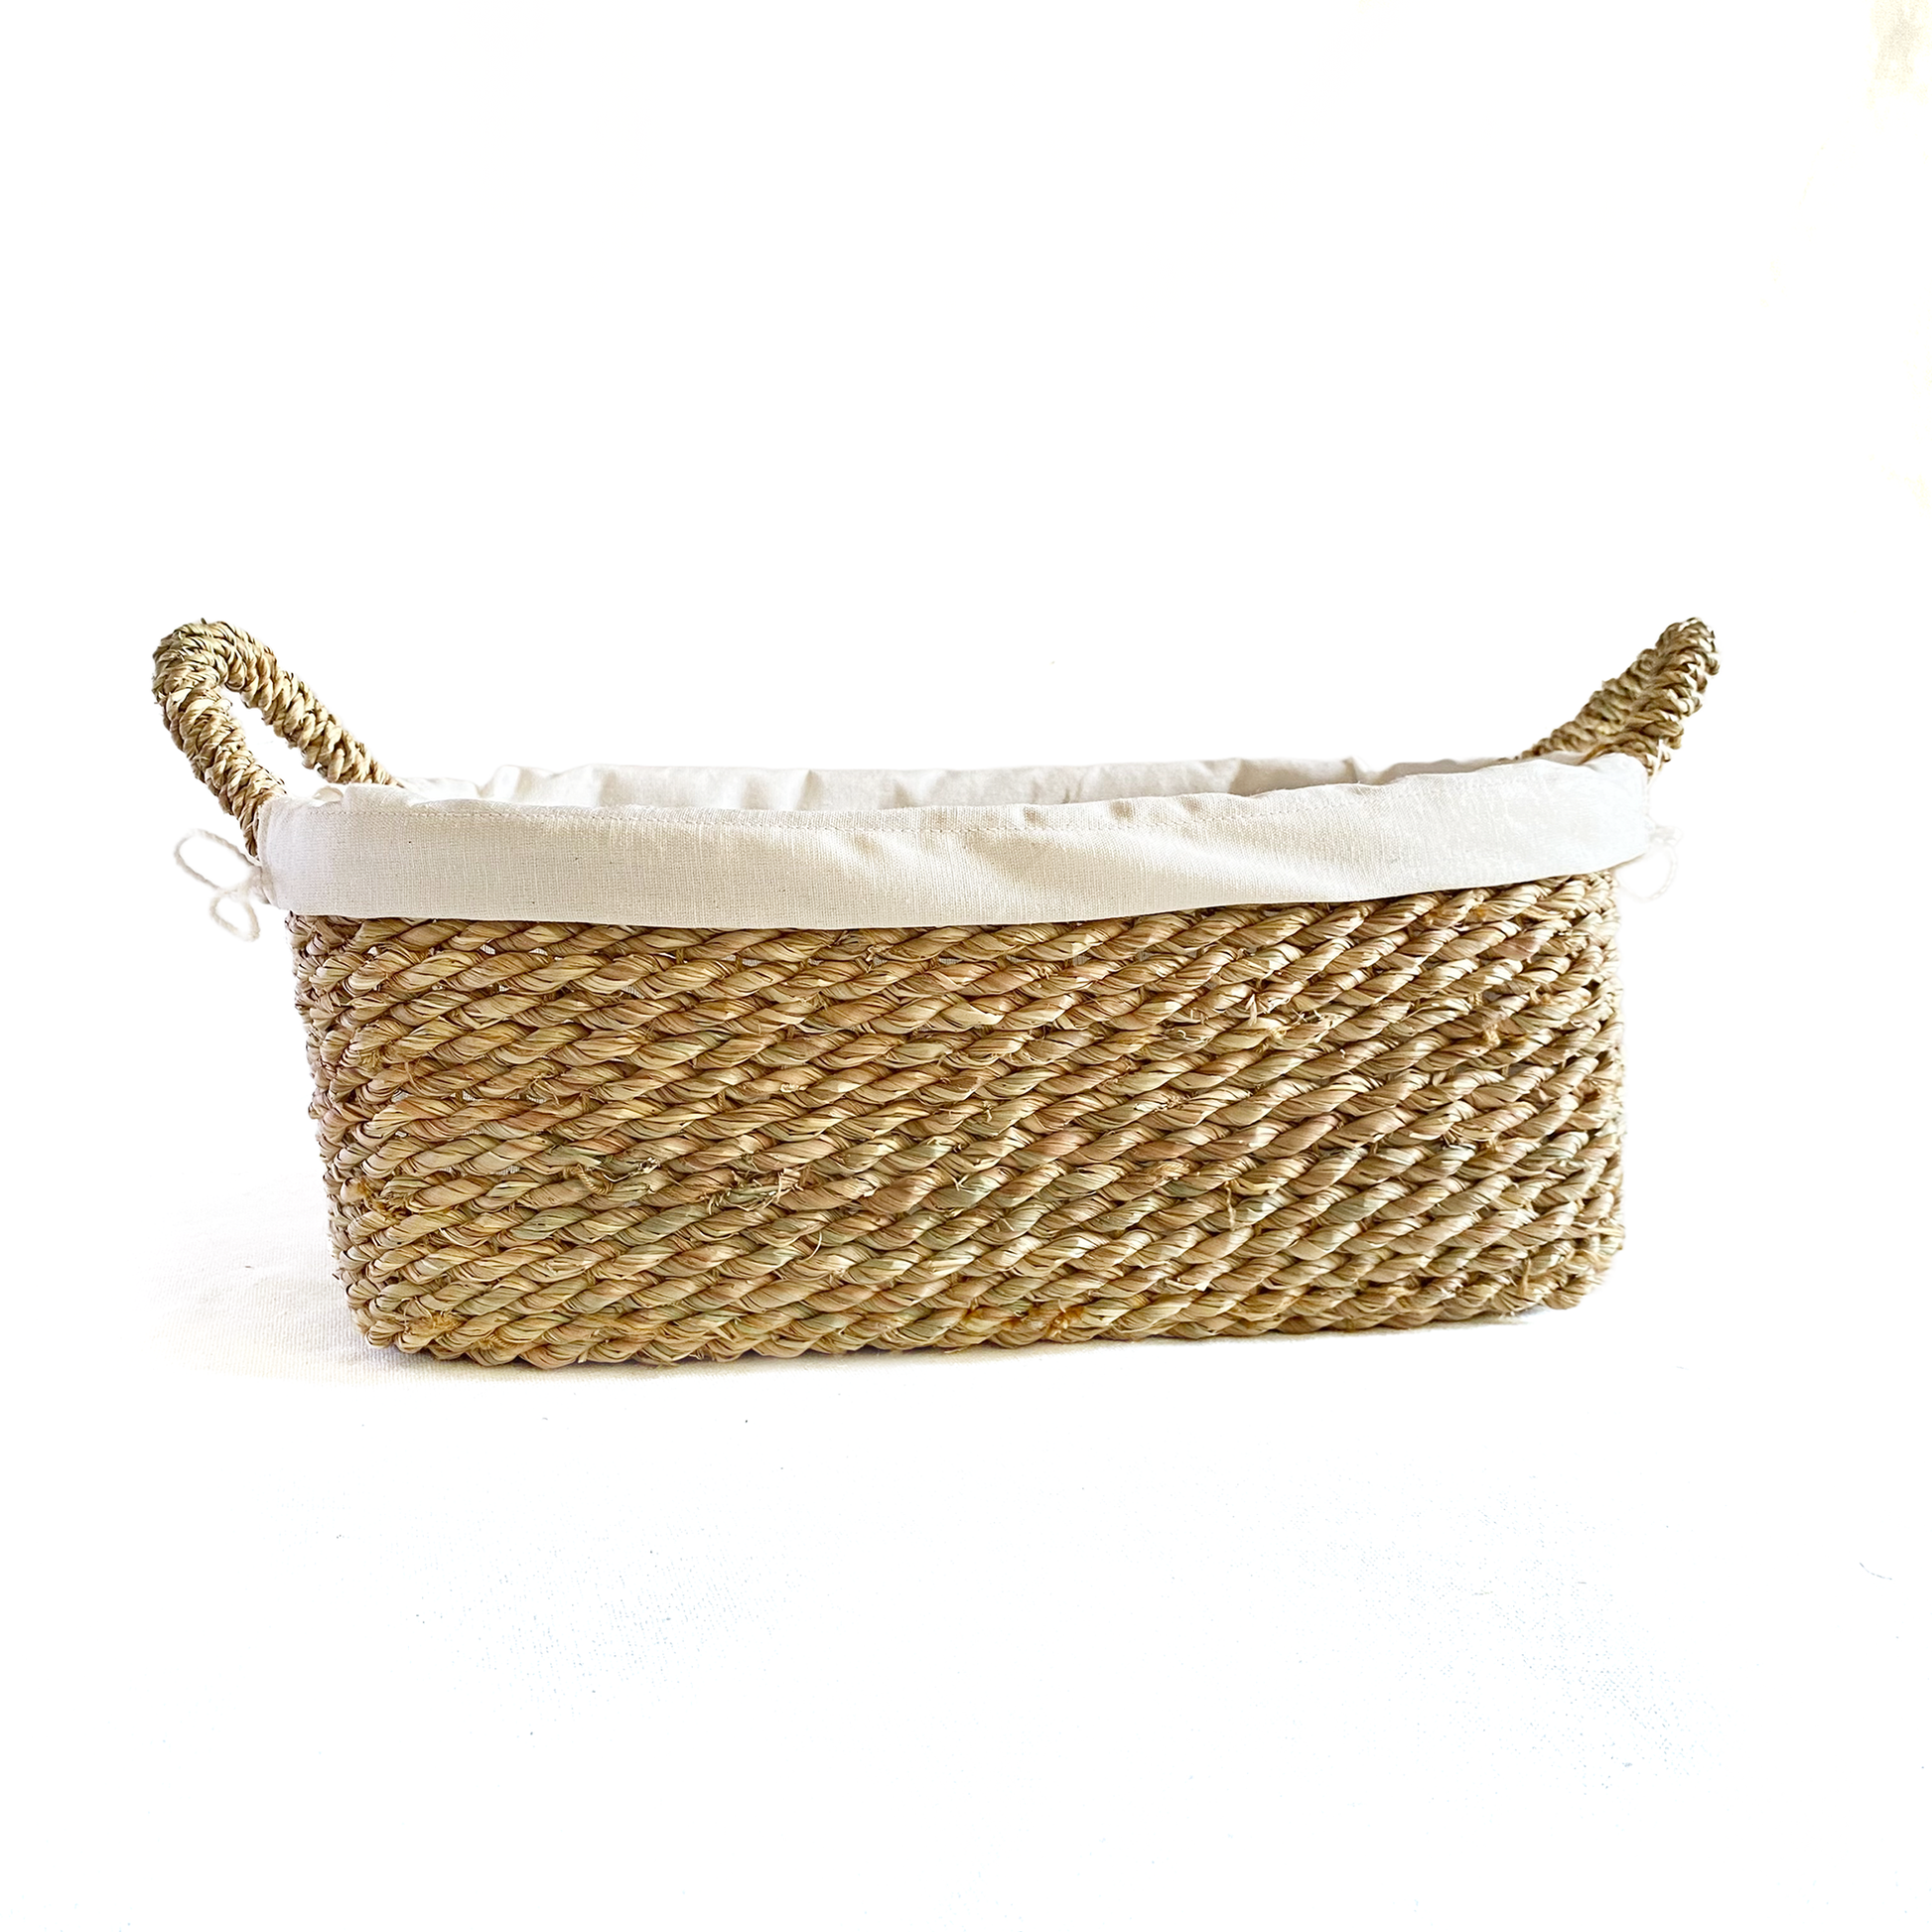 Halfa Rectangular Basket with Handle and Cover - Towels سلة حلفا مستطيلة بيد وجراب - فوط